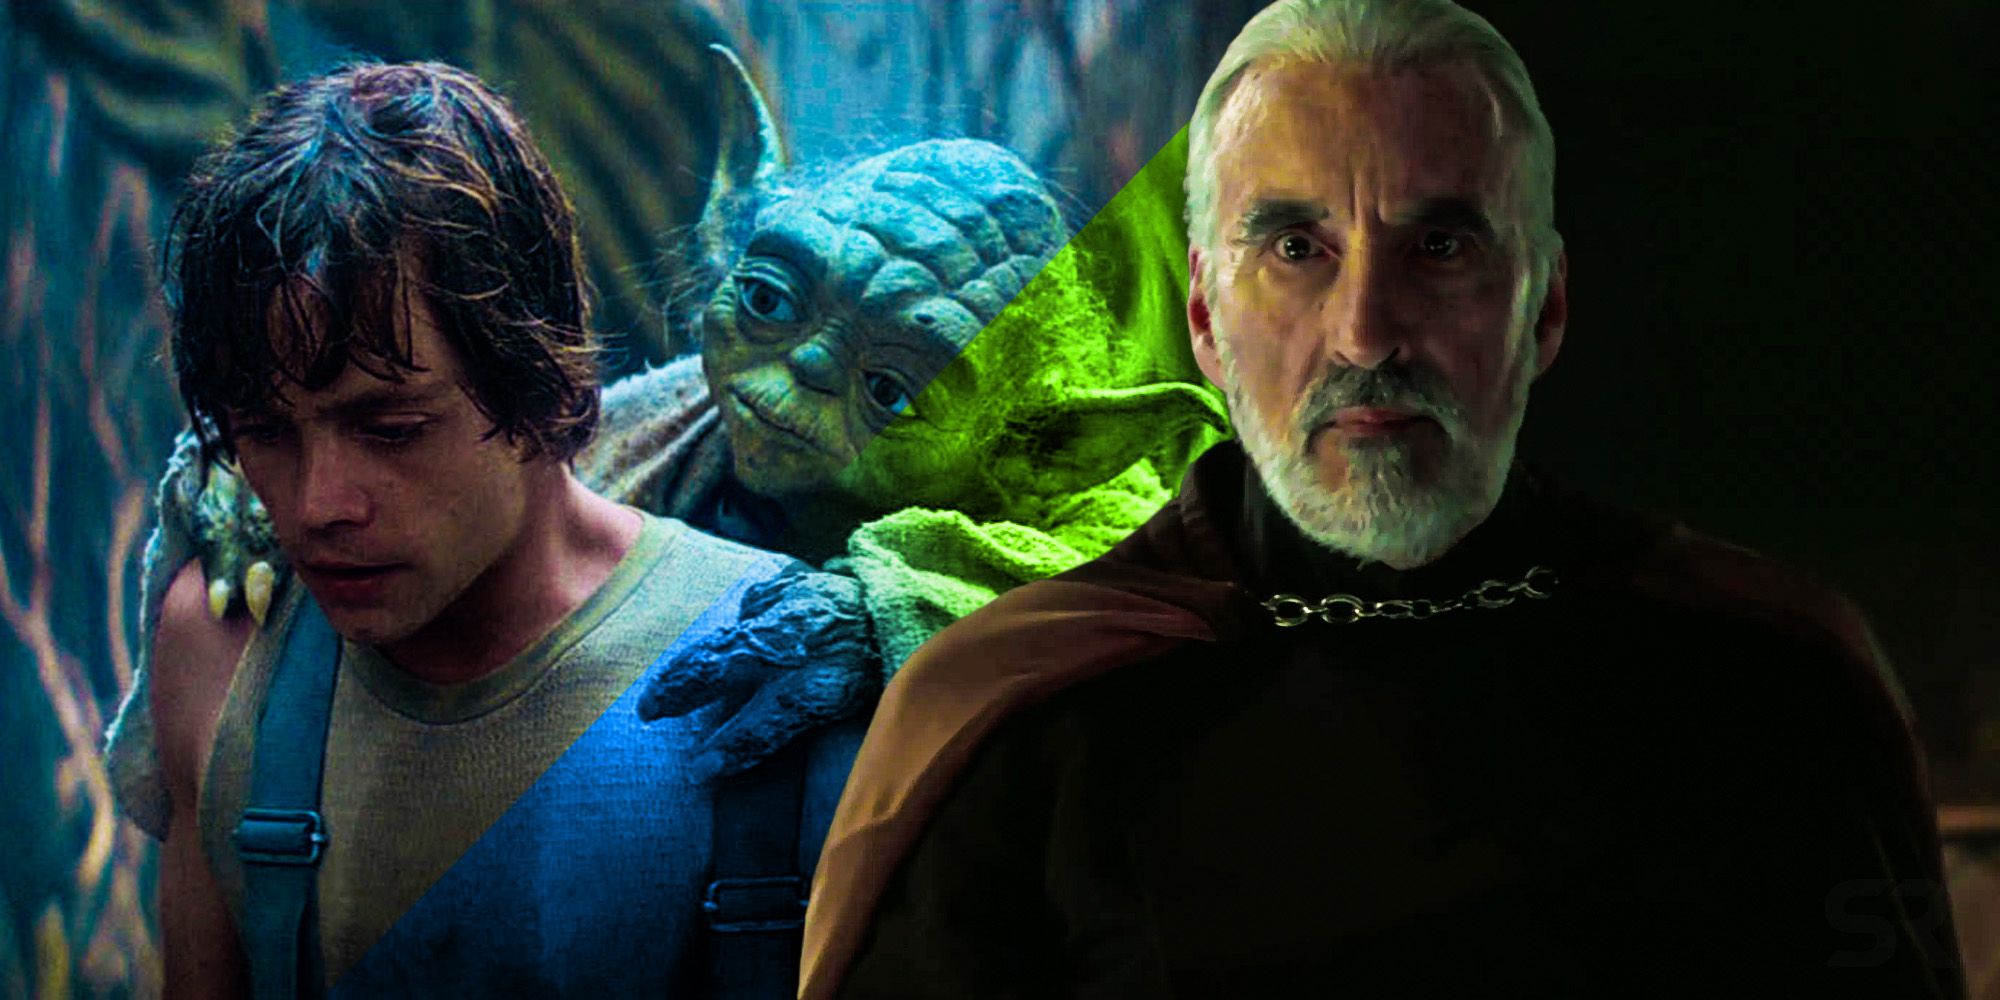 Star Wars Count Dooku Was The Reason Yoda Wouldn’t Train Luke